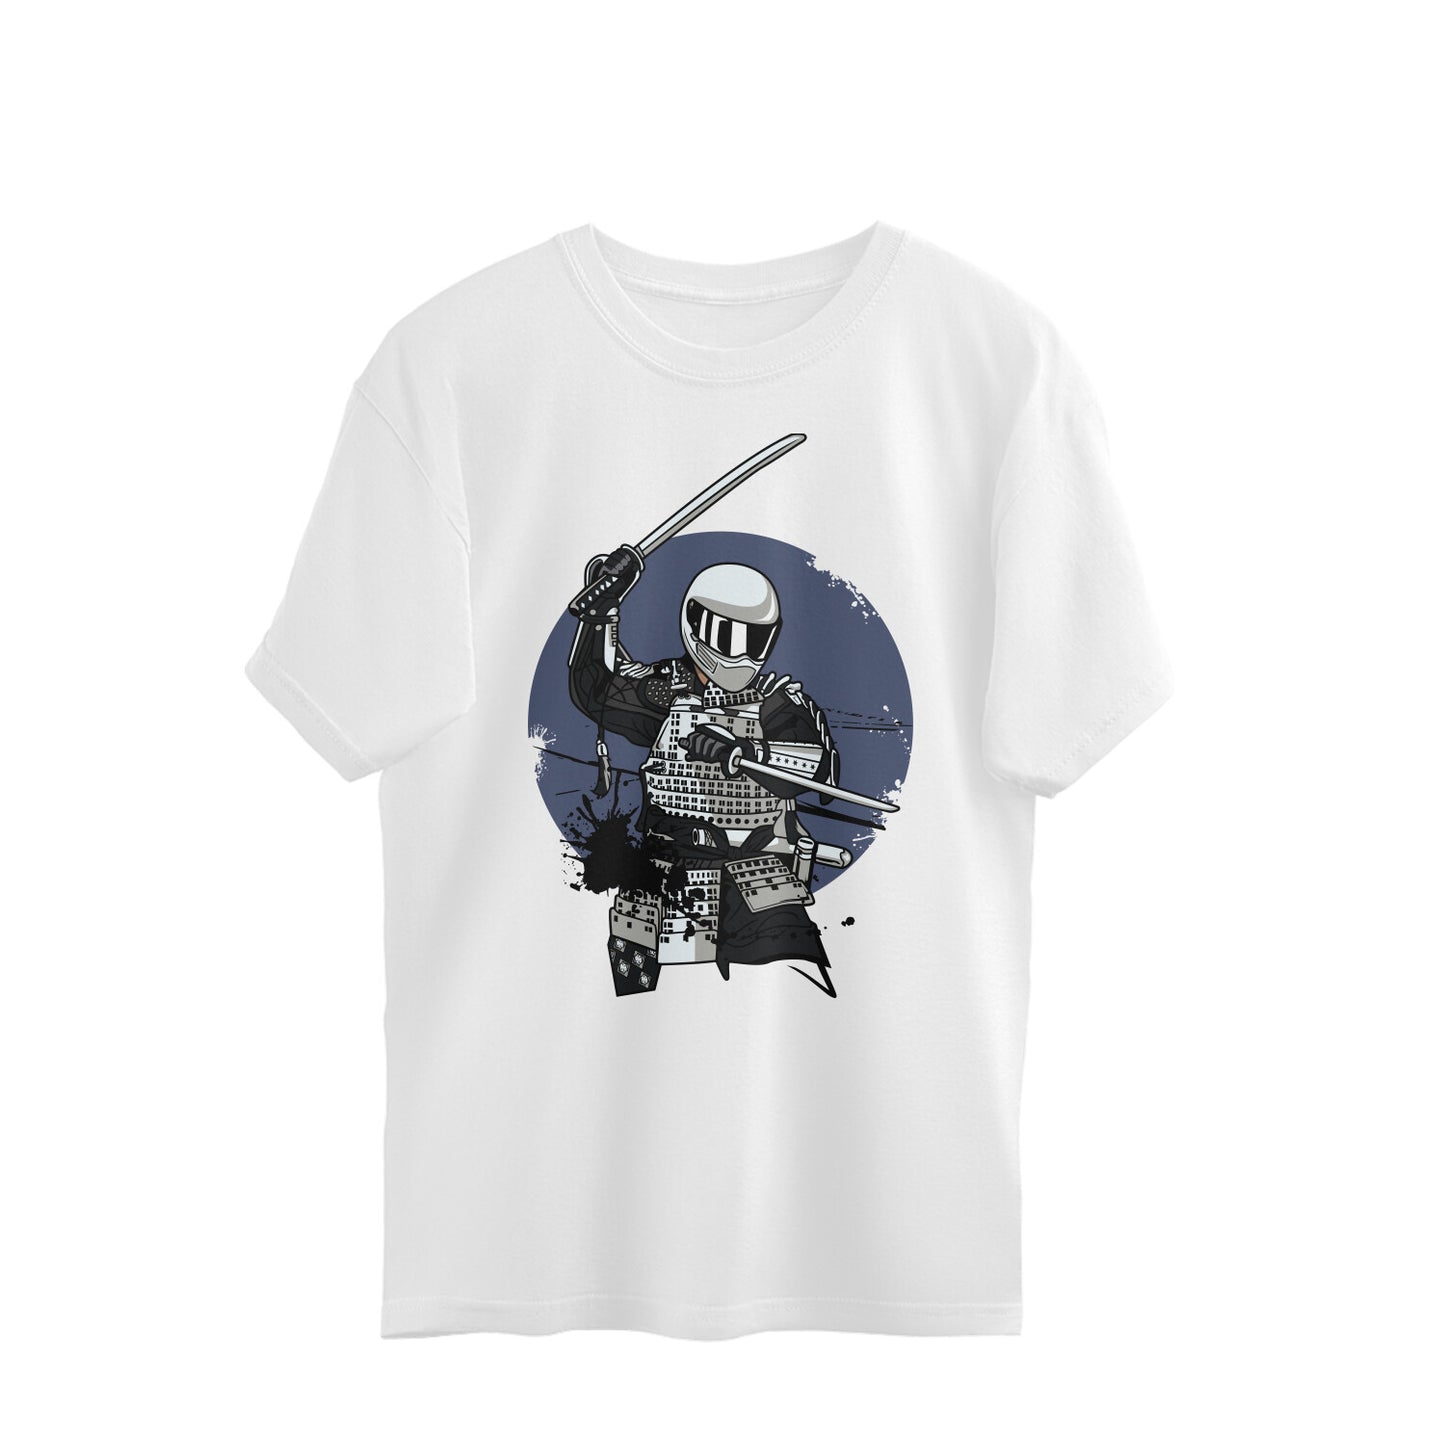 Galactic Blades - Oversized T-shirt